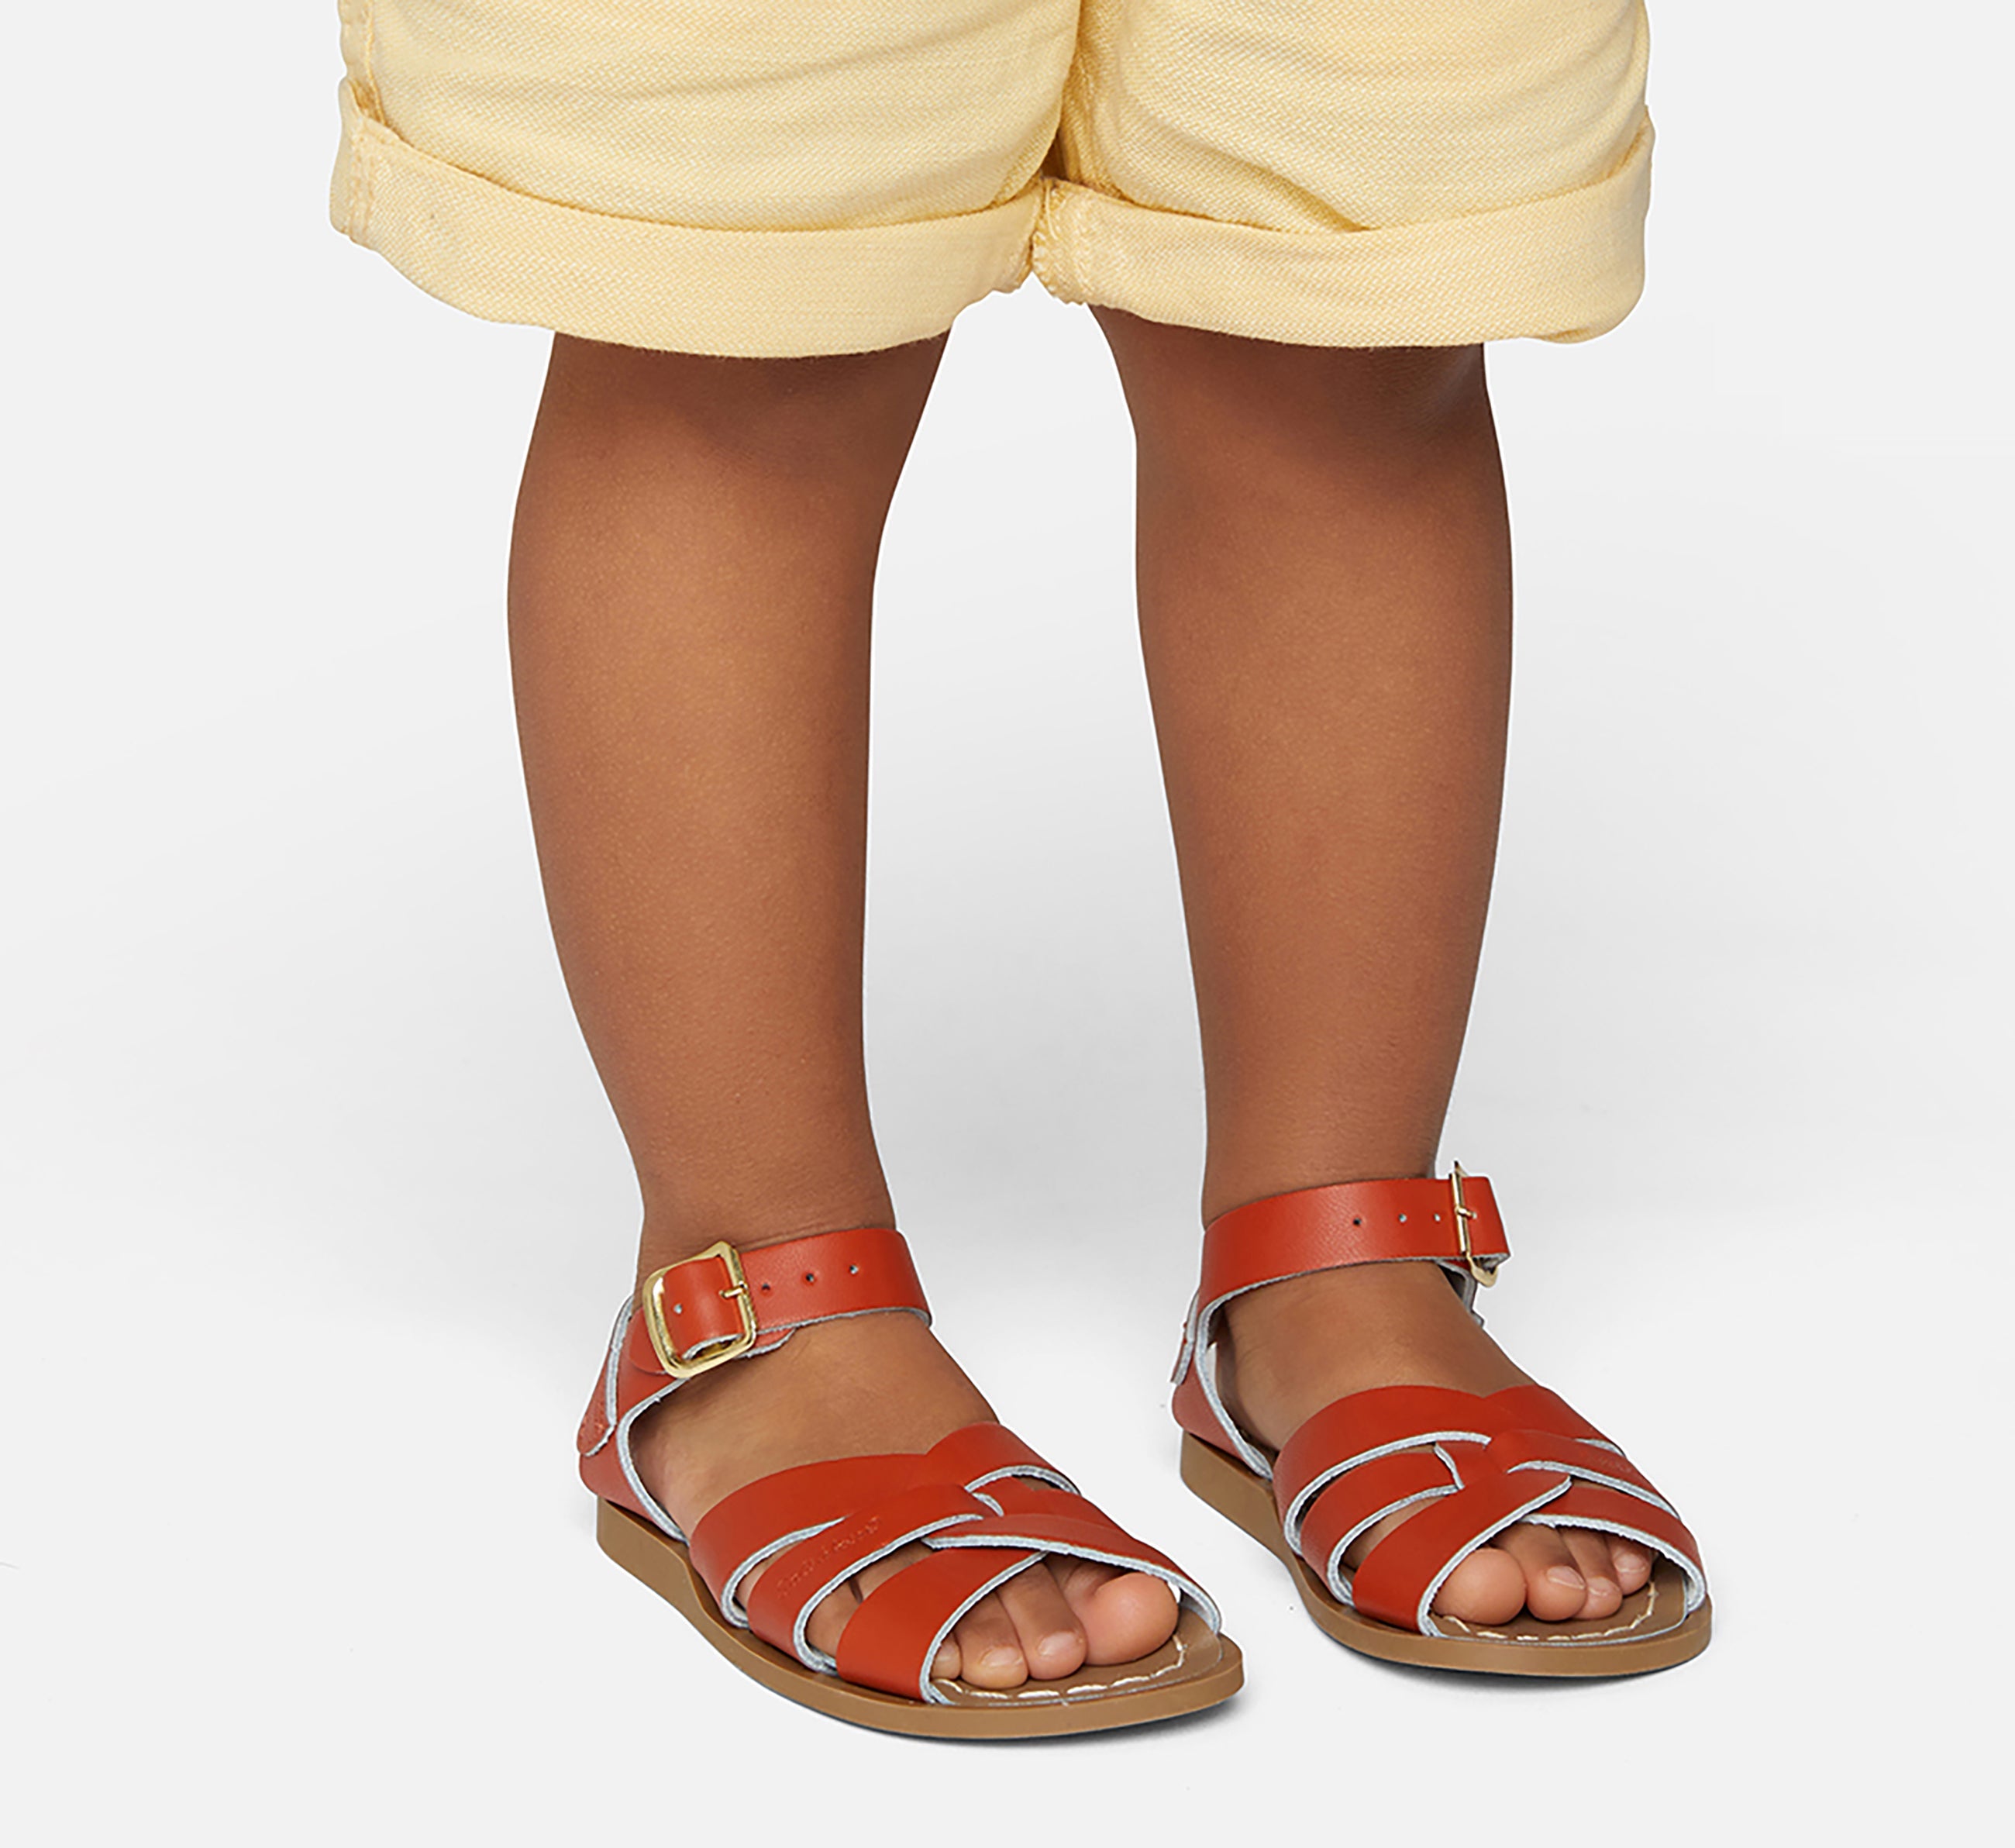 Original Paprika Kids Sandal